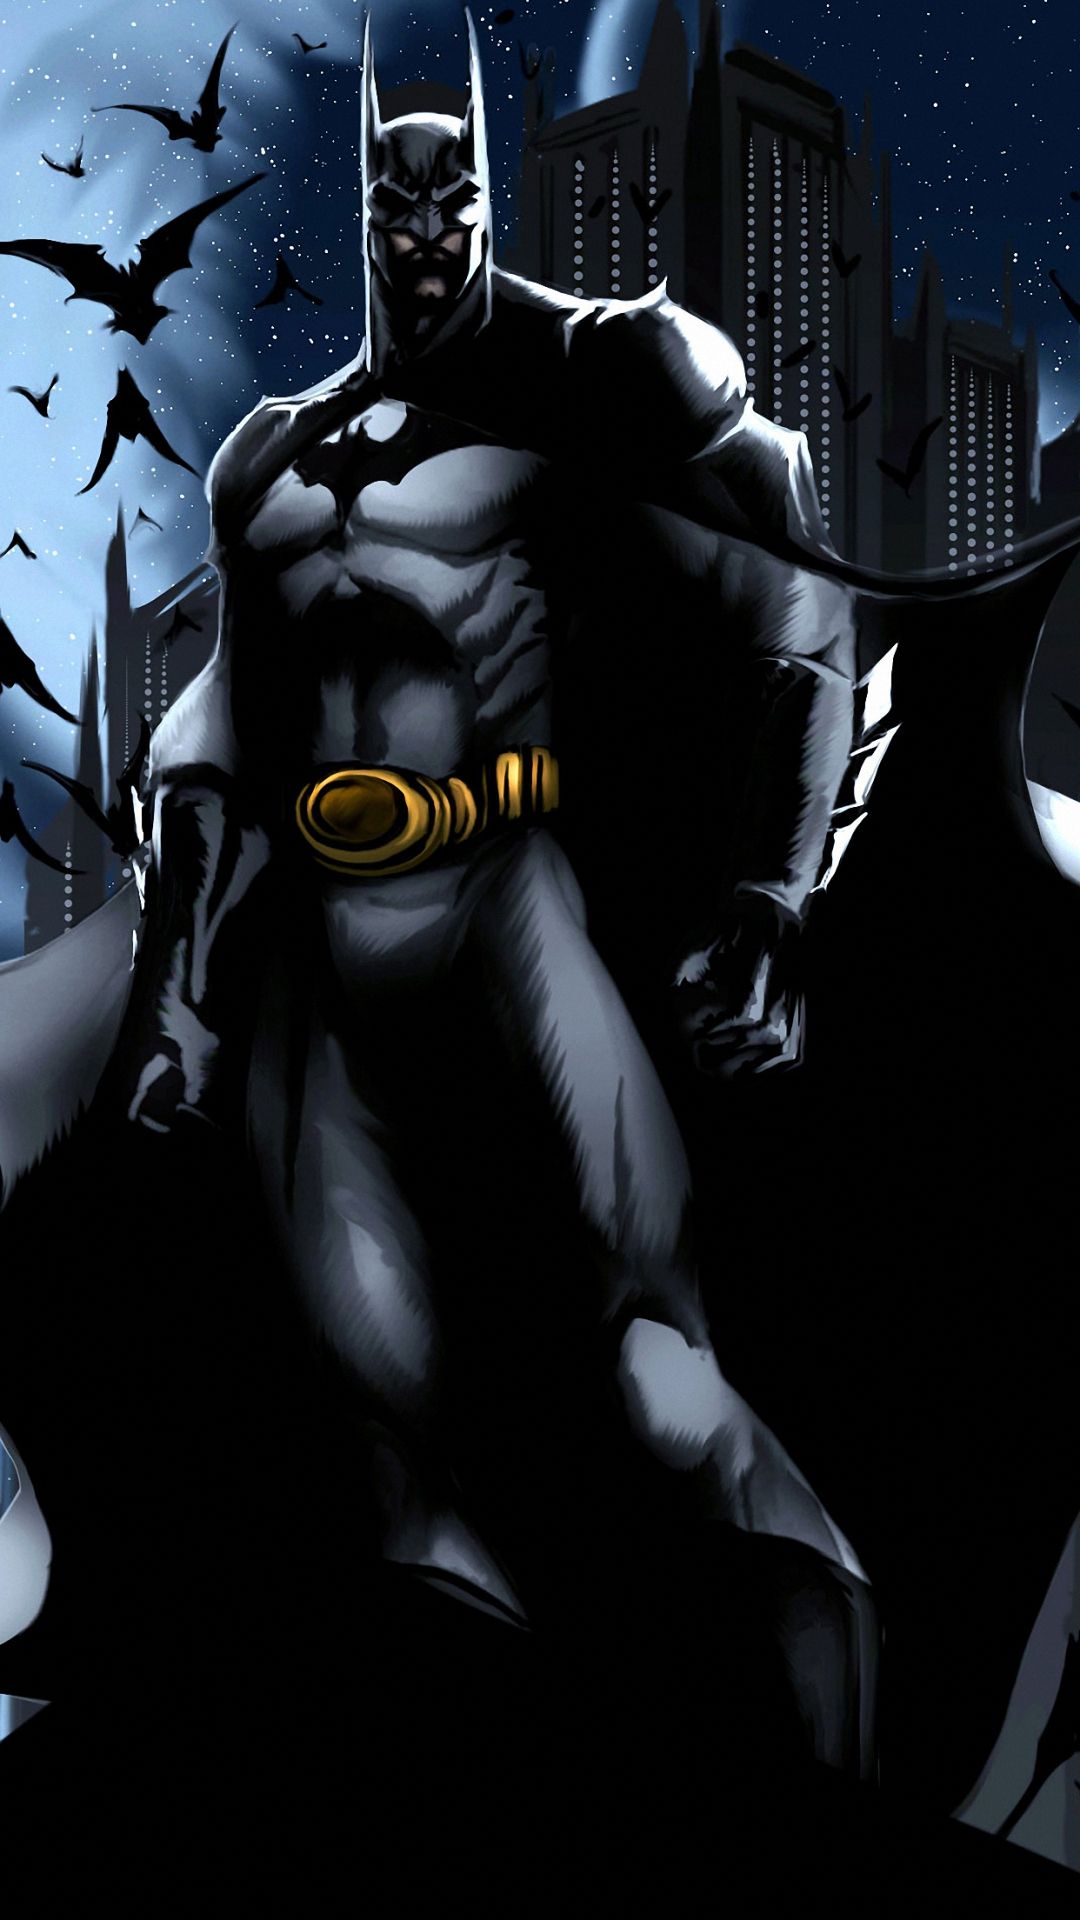 Batman Wallpaper for iPhone #batmanwallpaperforiphone. Batman cartoon, Batman wallpaper, Batman picture